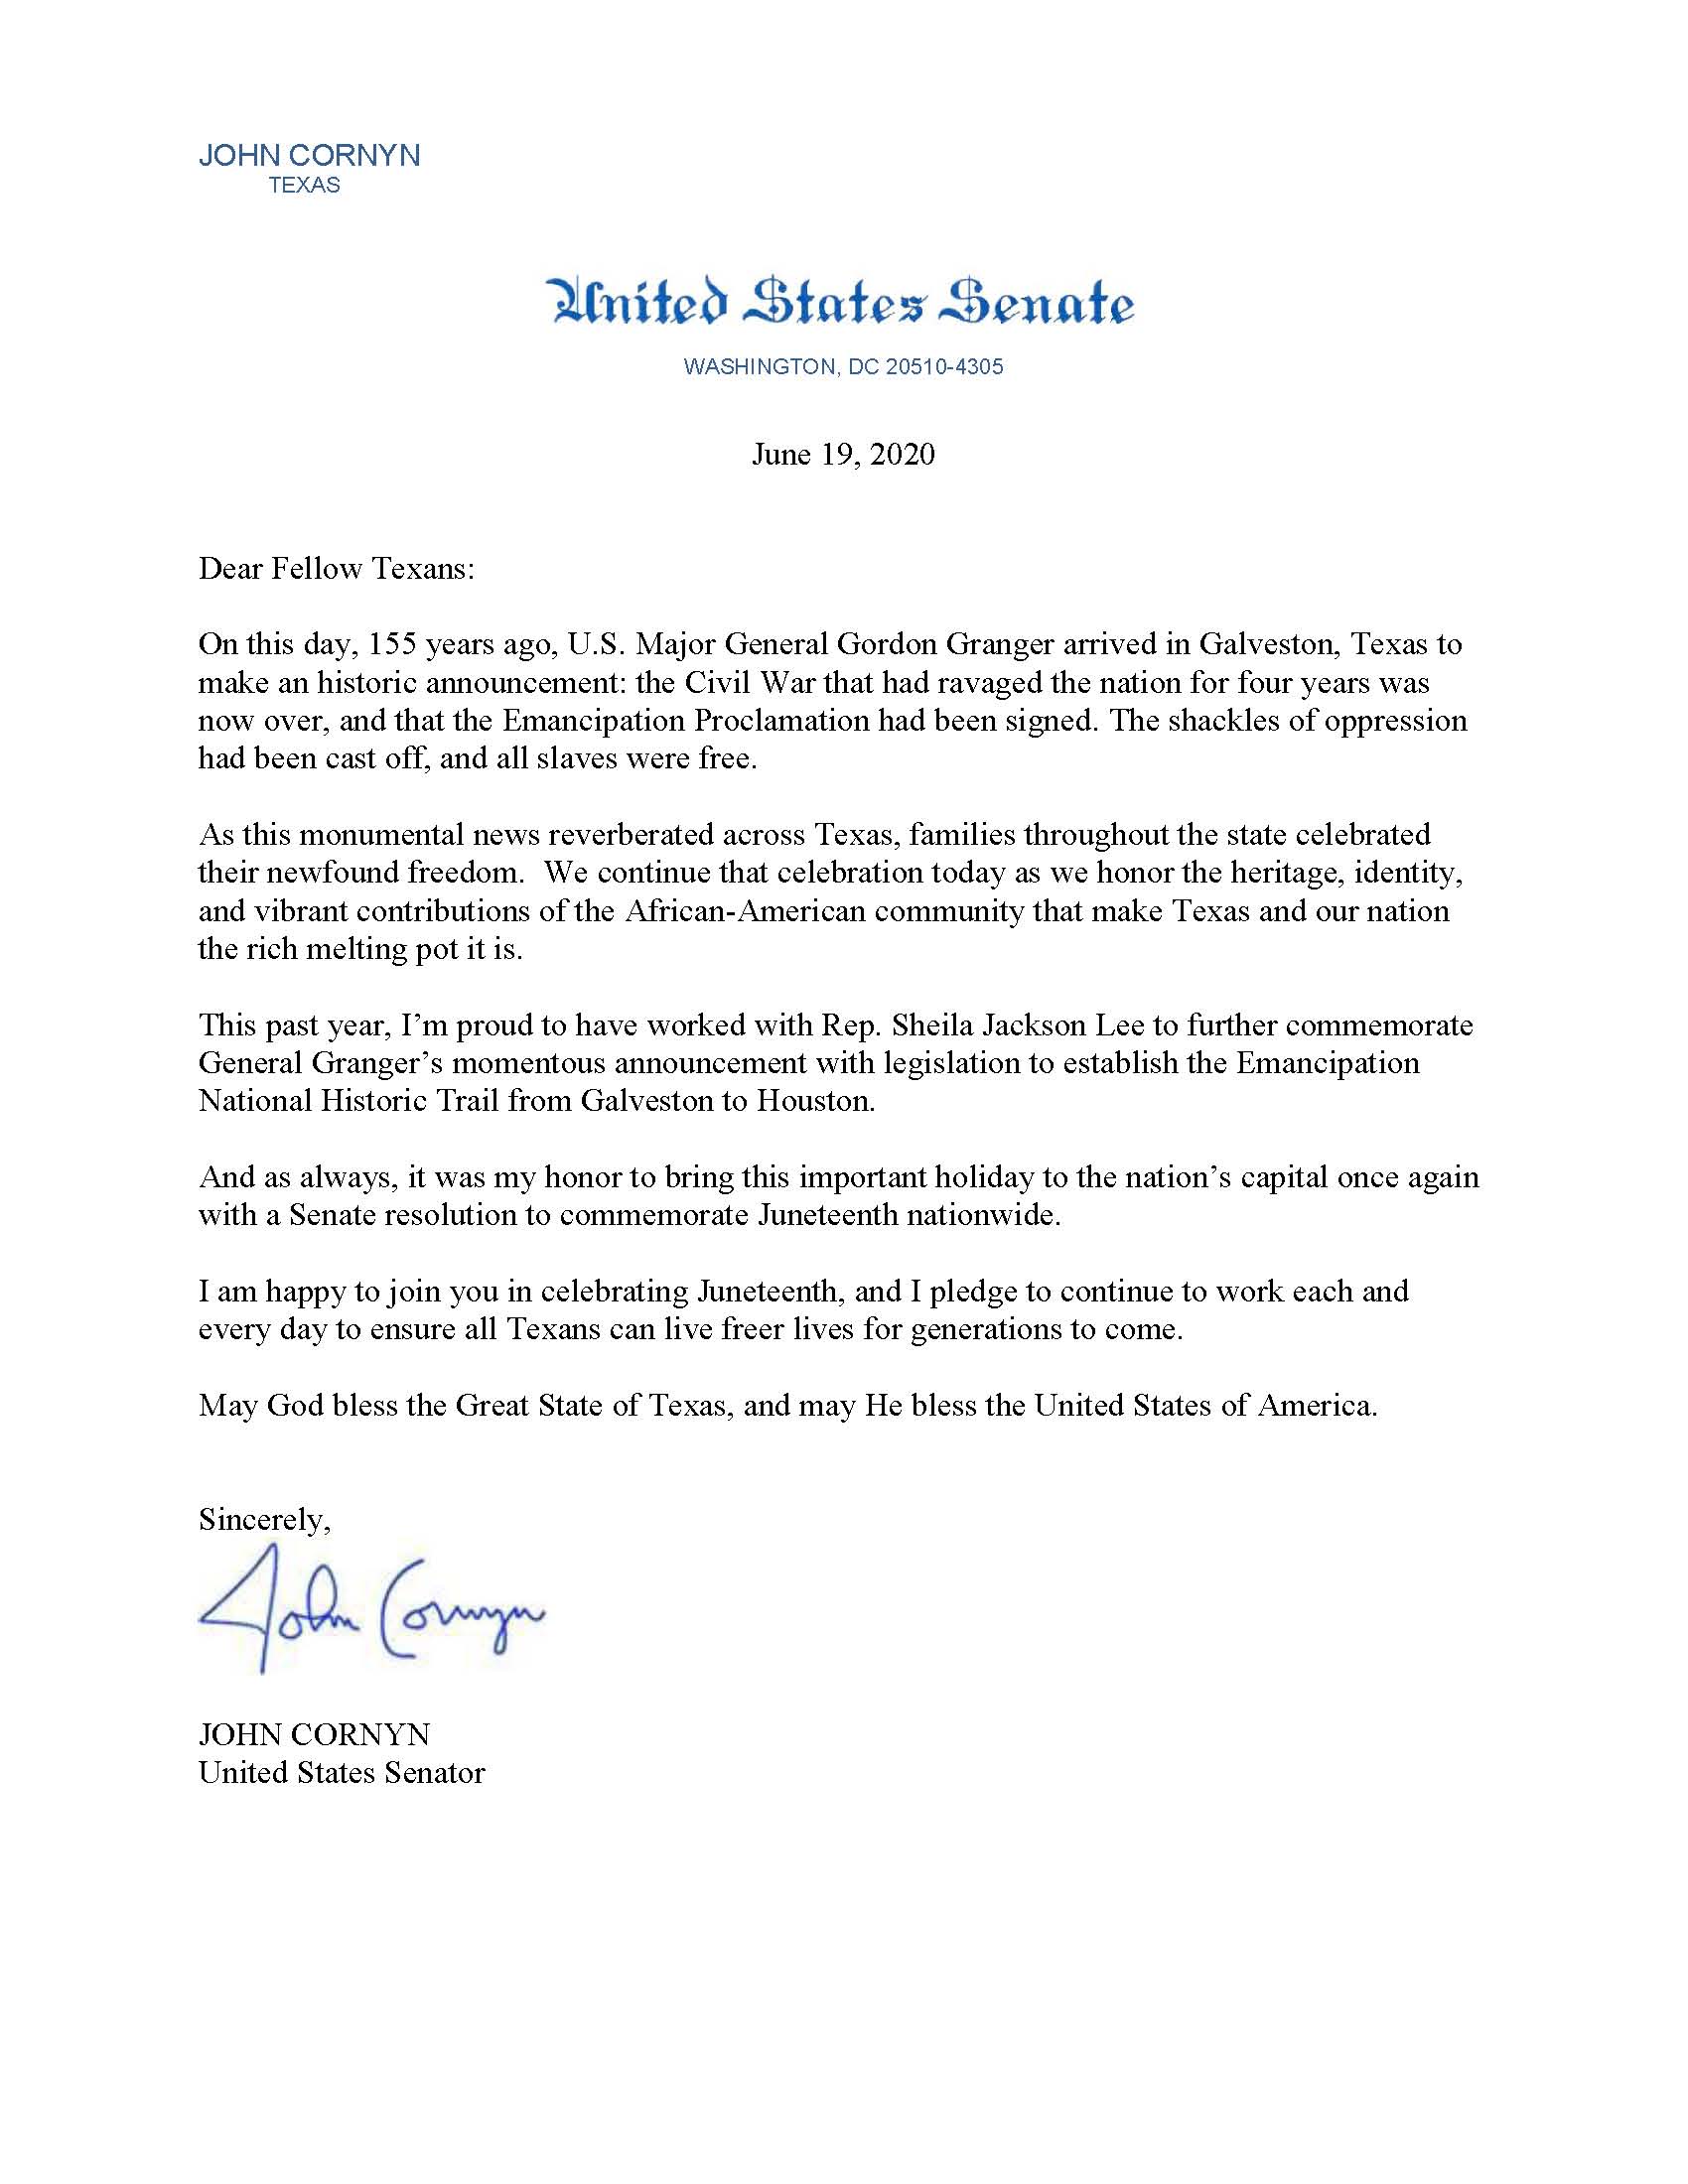 Senator Cornyn's Juneteenth Letter 2020